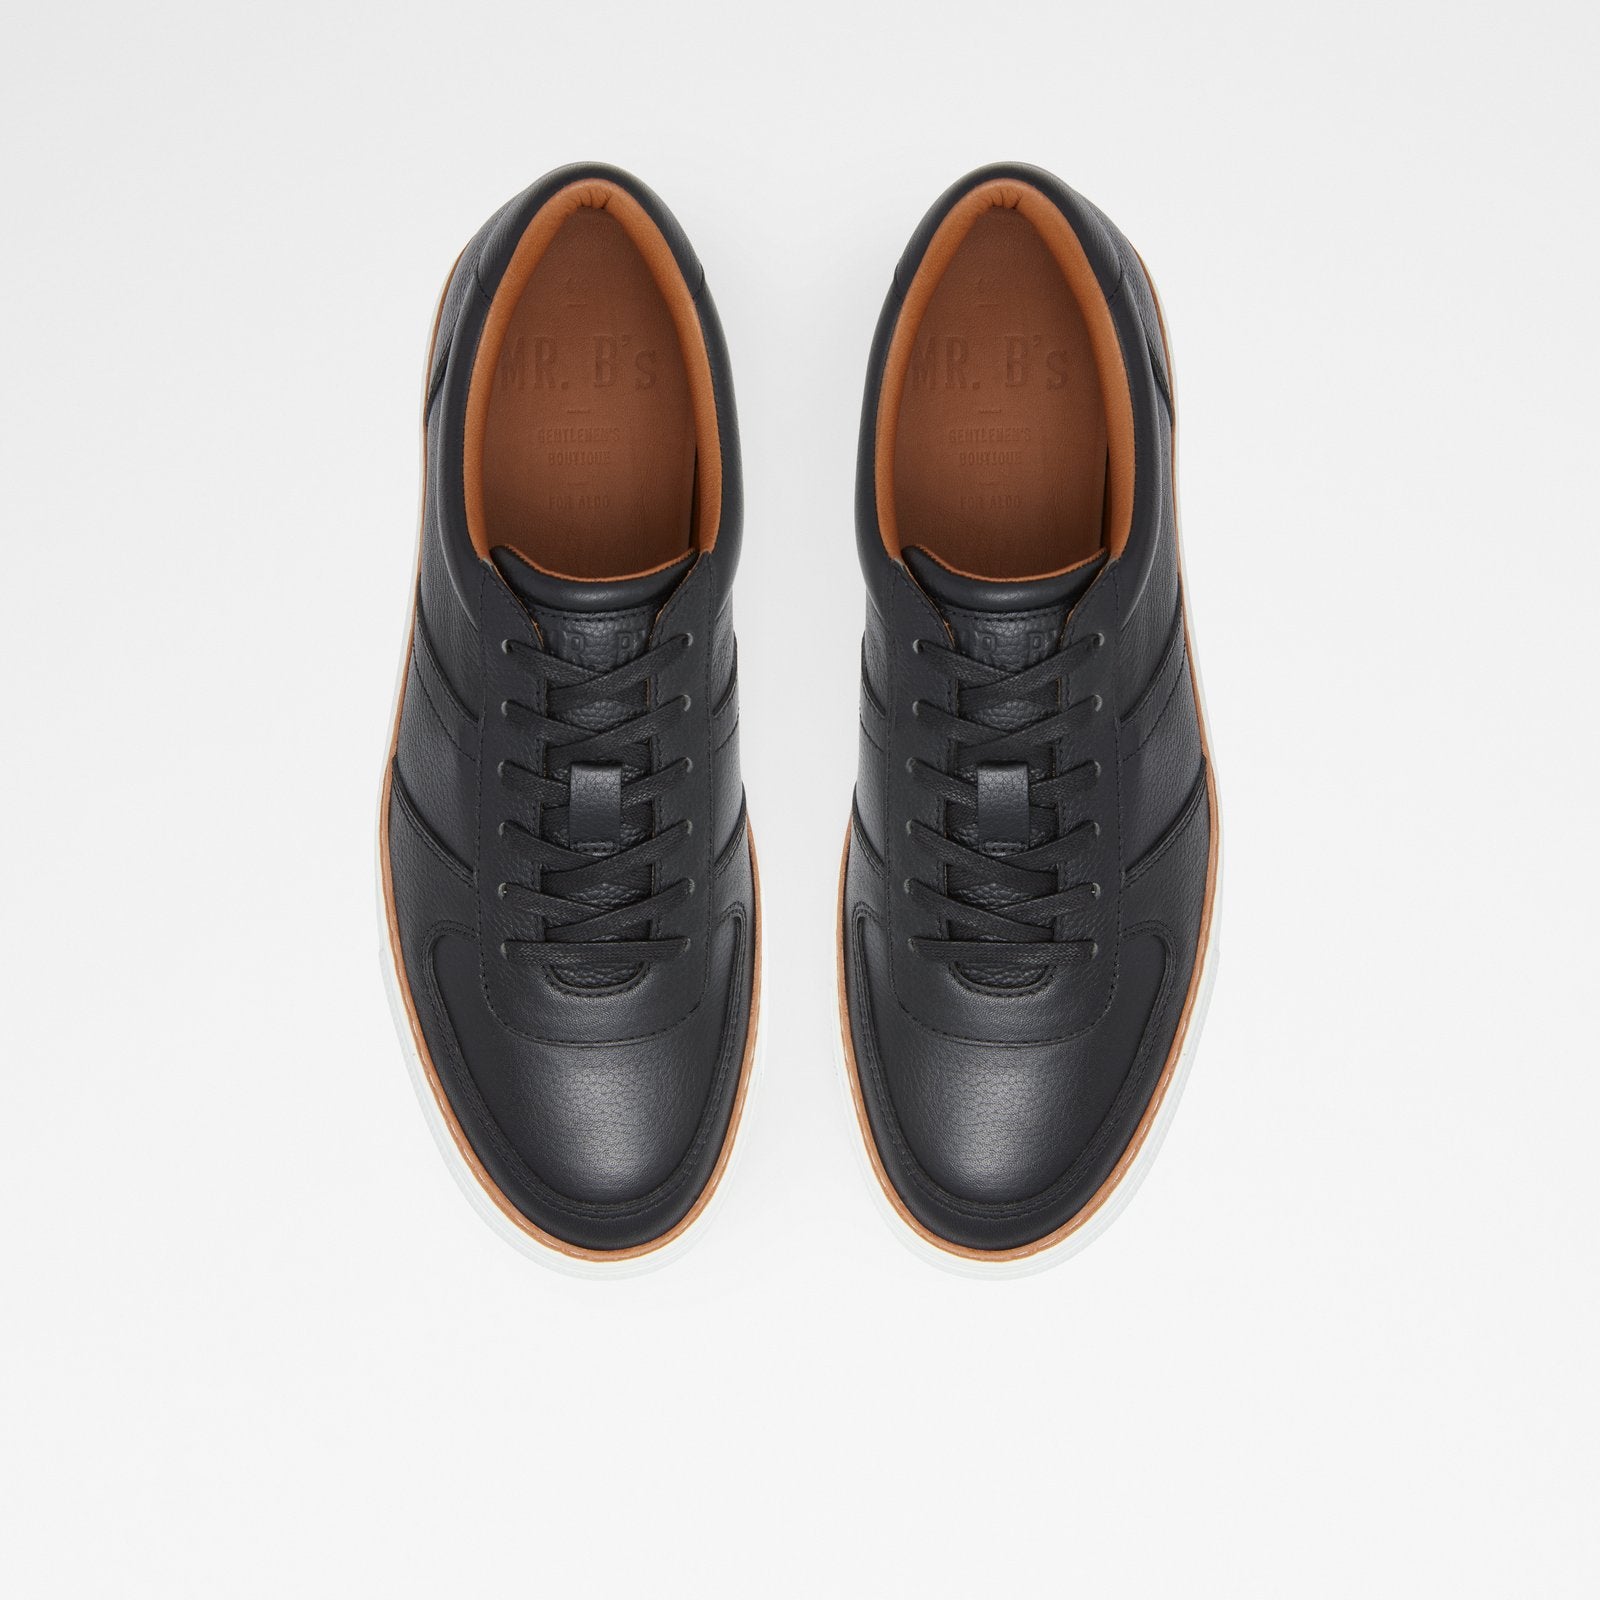 Checkers Men Shoes - Black - ALDO KSA